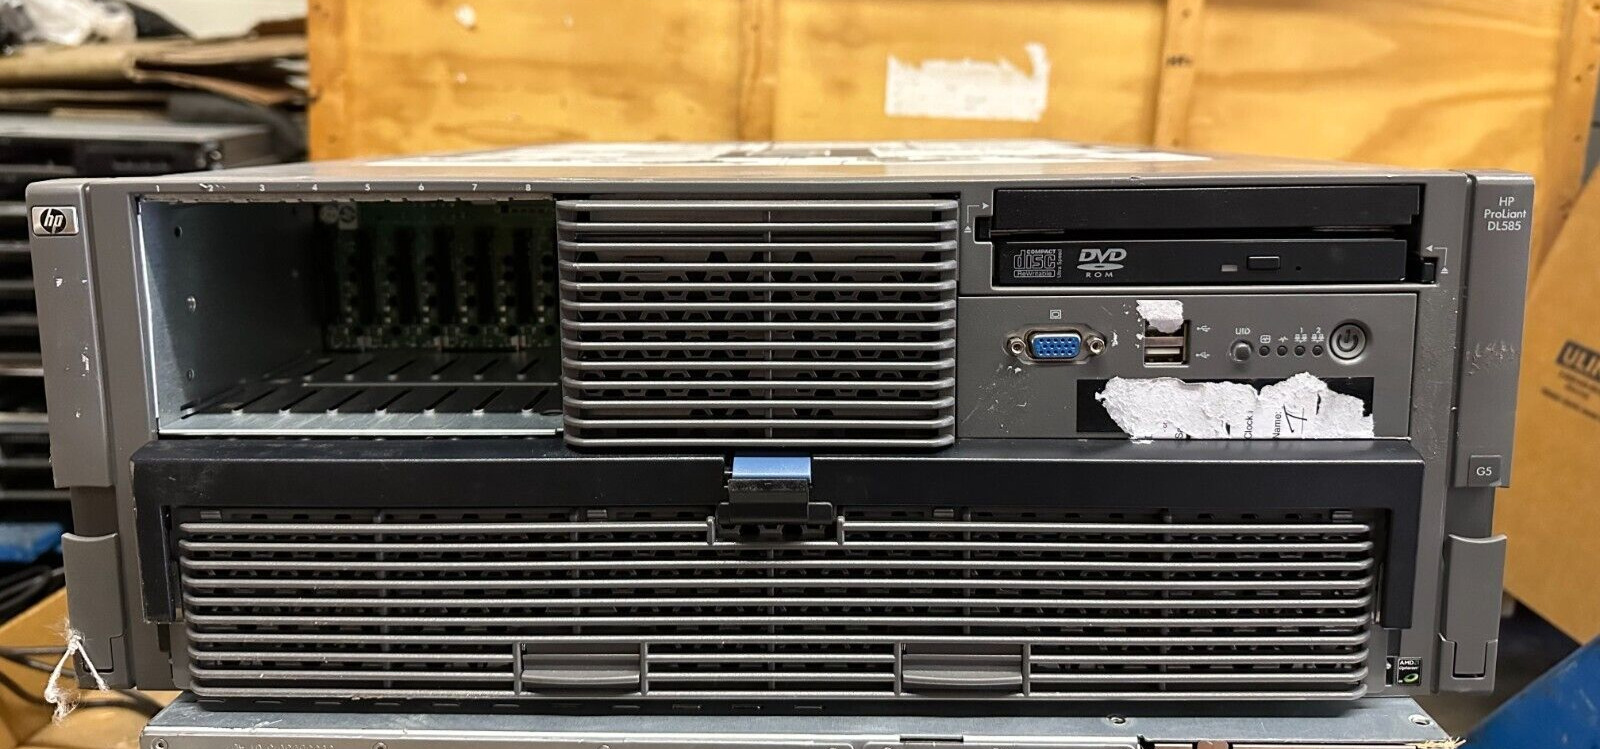 HP Proliant Dl585 G5 Server